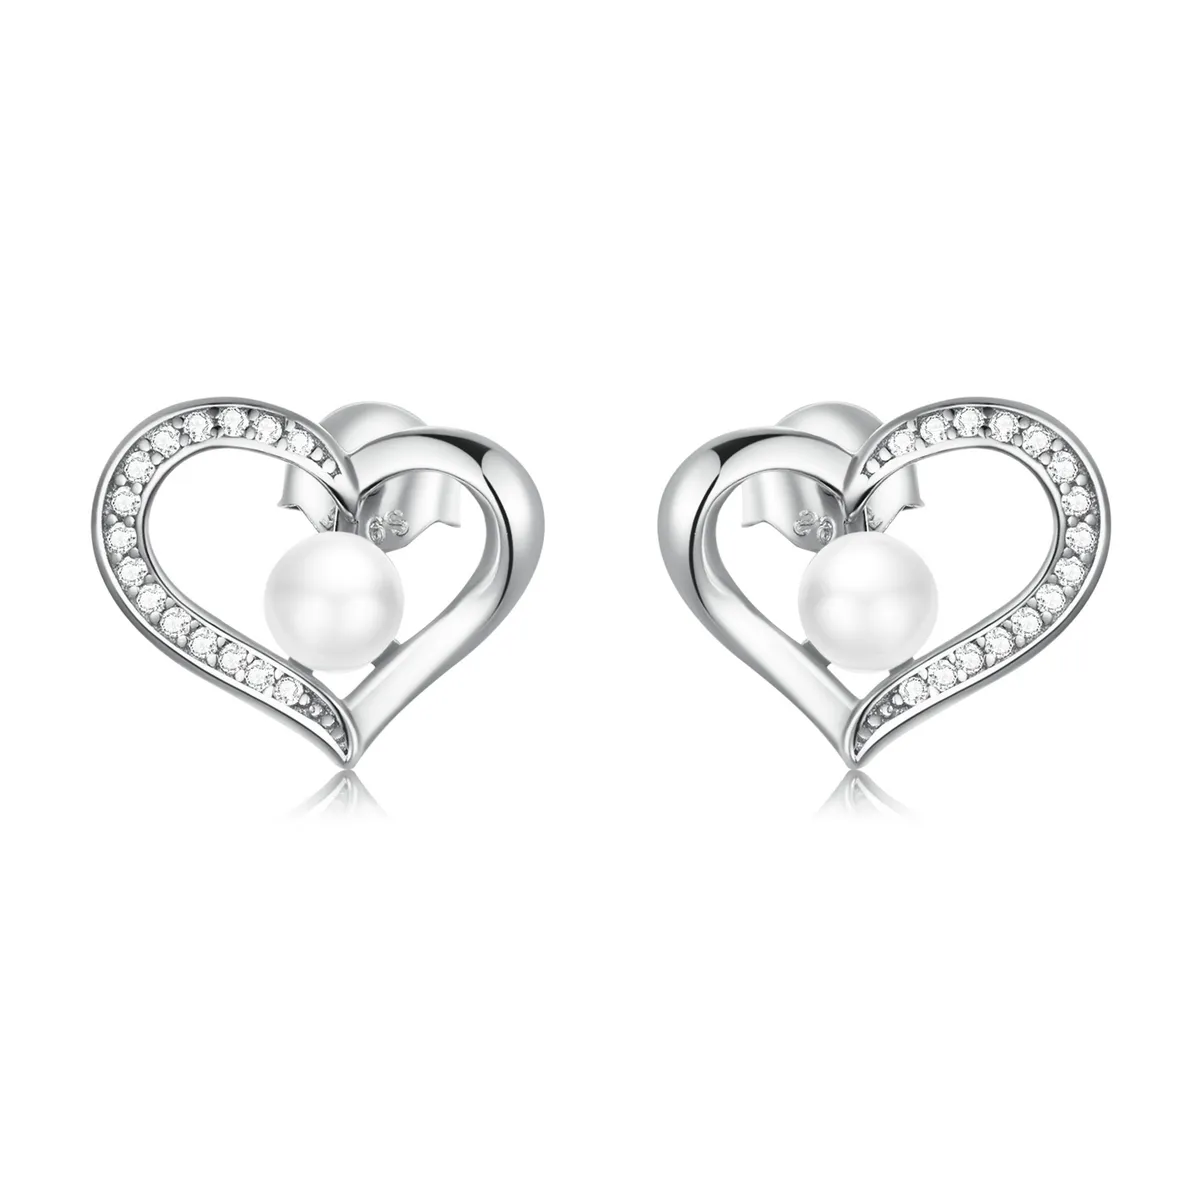 Pandora Style Love Shell Beads - Simple Stud Earrings - BSE550-A